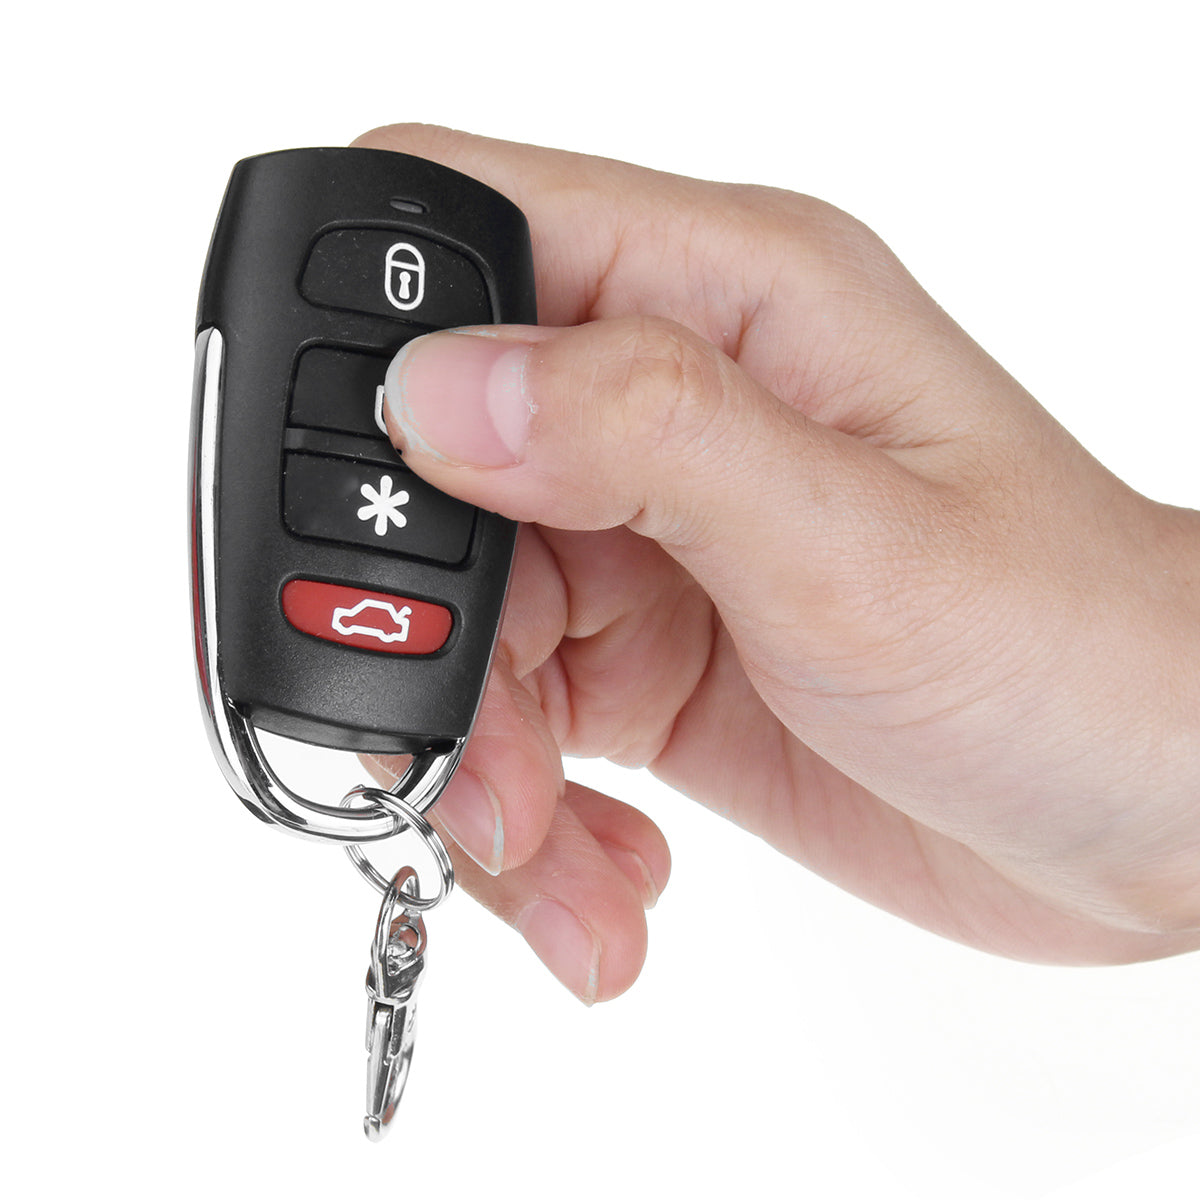 Remote Control Car Alarm System Keyless Entry Security 2 4 Door Power Lock Actuator Motor Kit - Auto GoShop